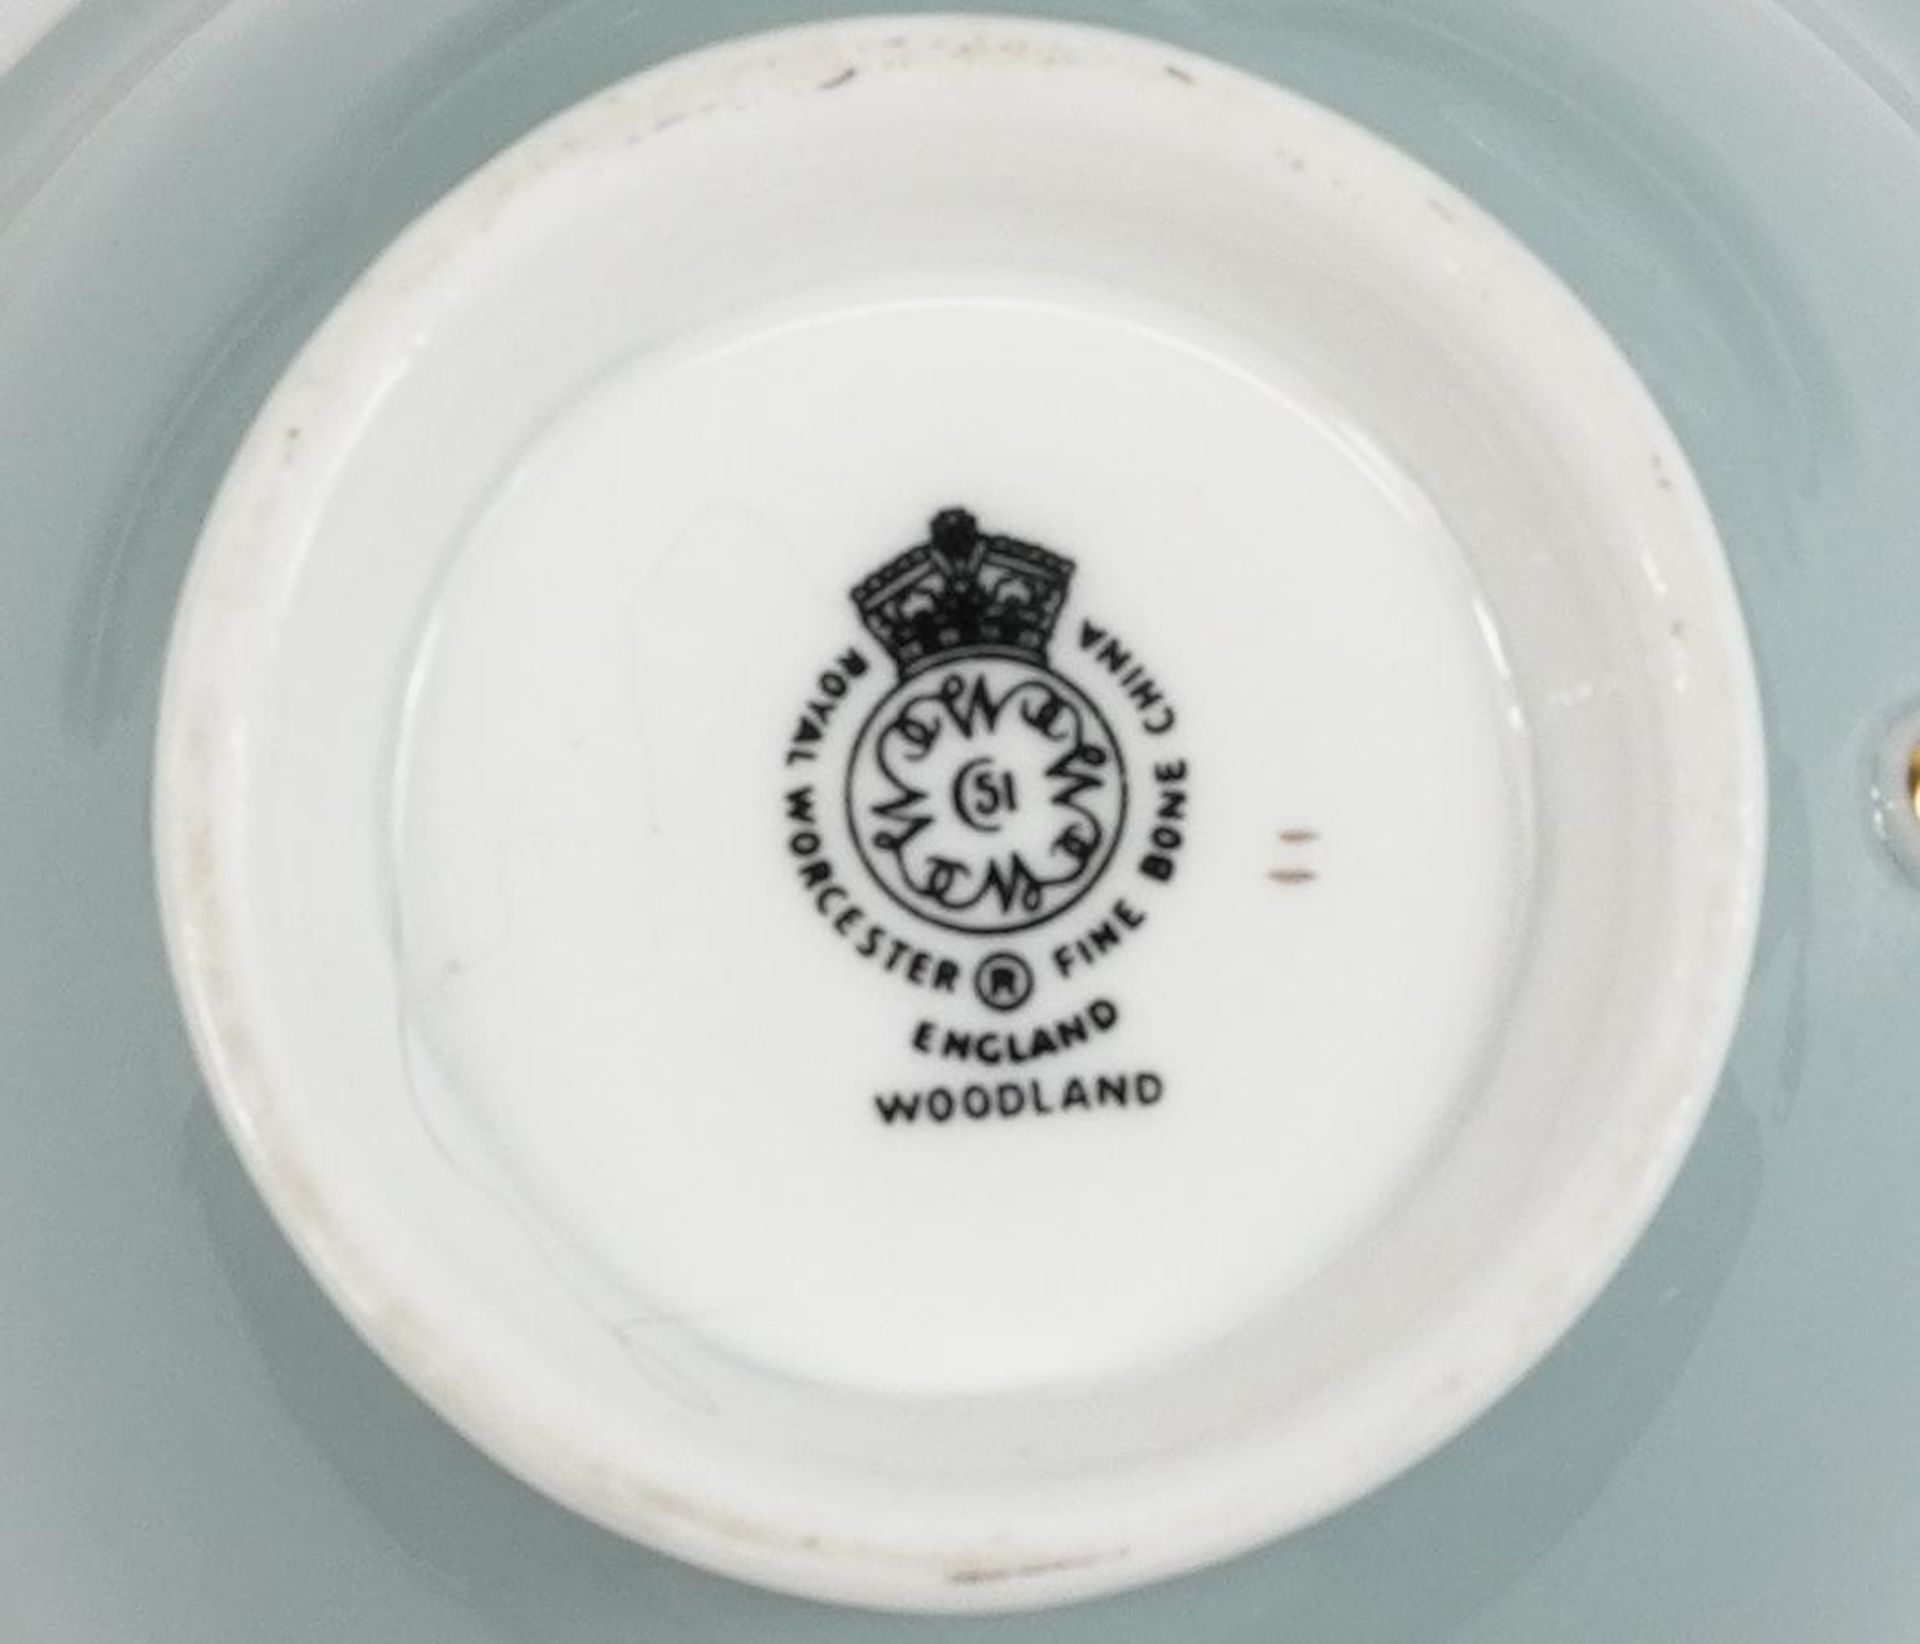 Royal Worcester Woodland pattern teaware including teapot, milk jug, sugar bowl and trios - Image 4 of 4